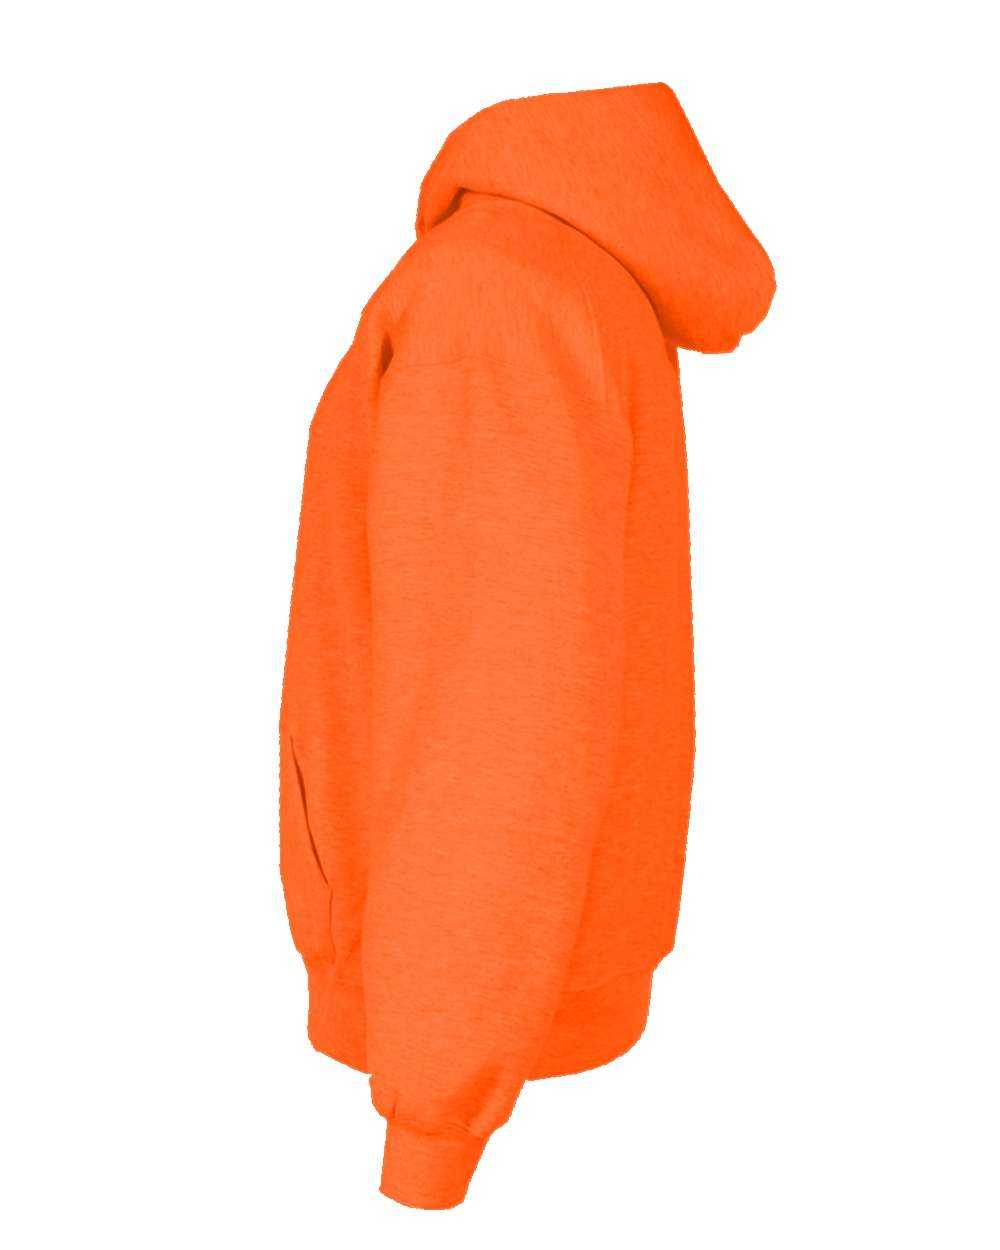 Badger Sport 1254 Hooded Sweatshirt - Orange - HIT a Double - 1